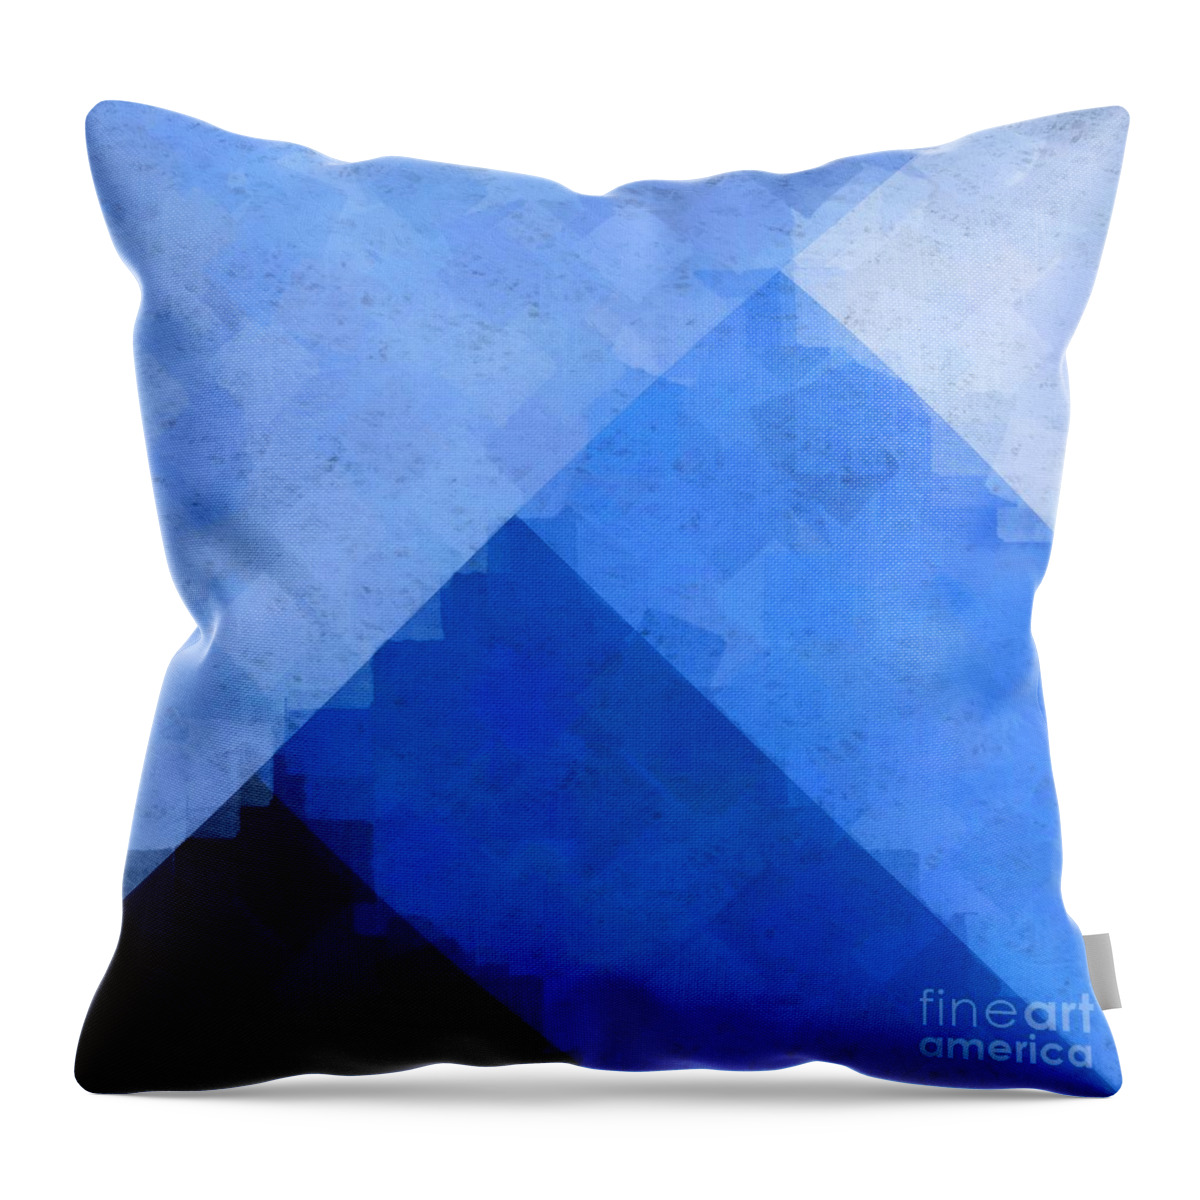 Blue Throw Pillow featuring the digital art BlueAngle by Bill King